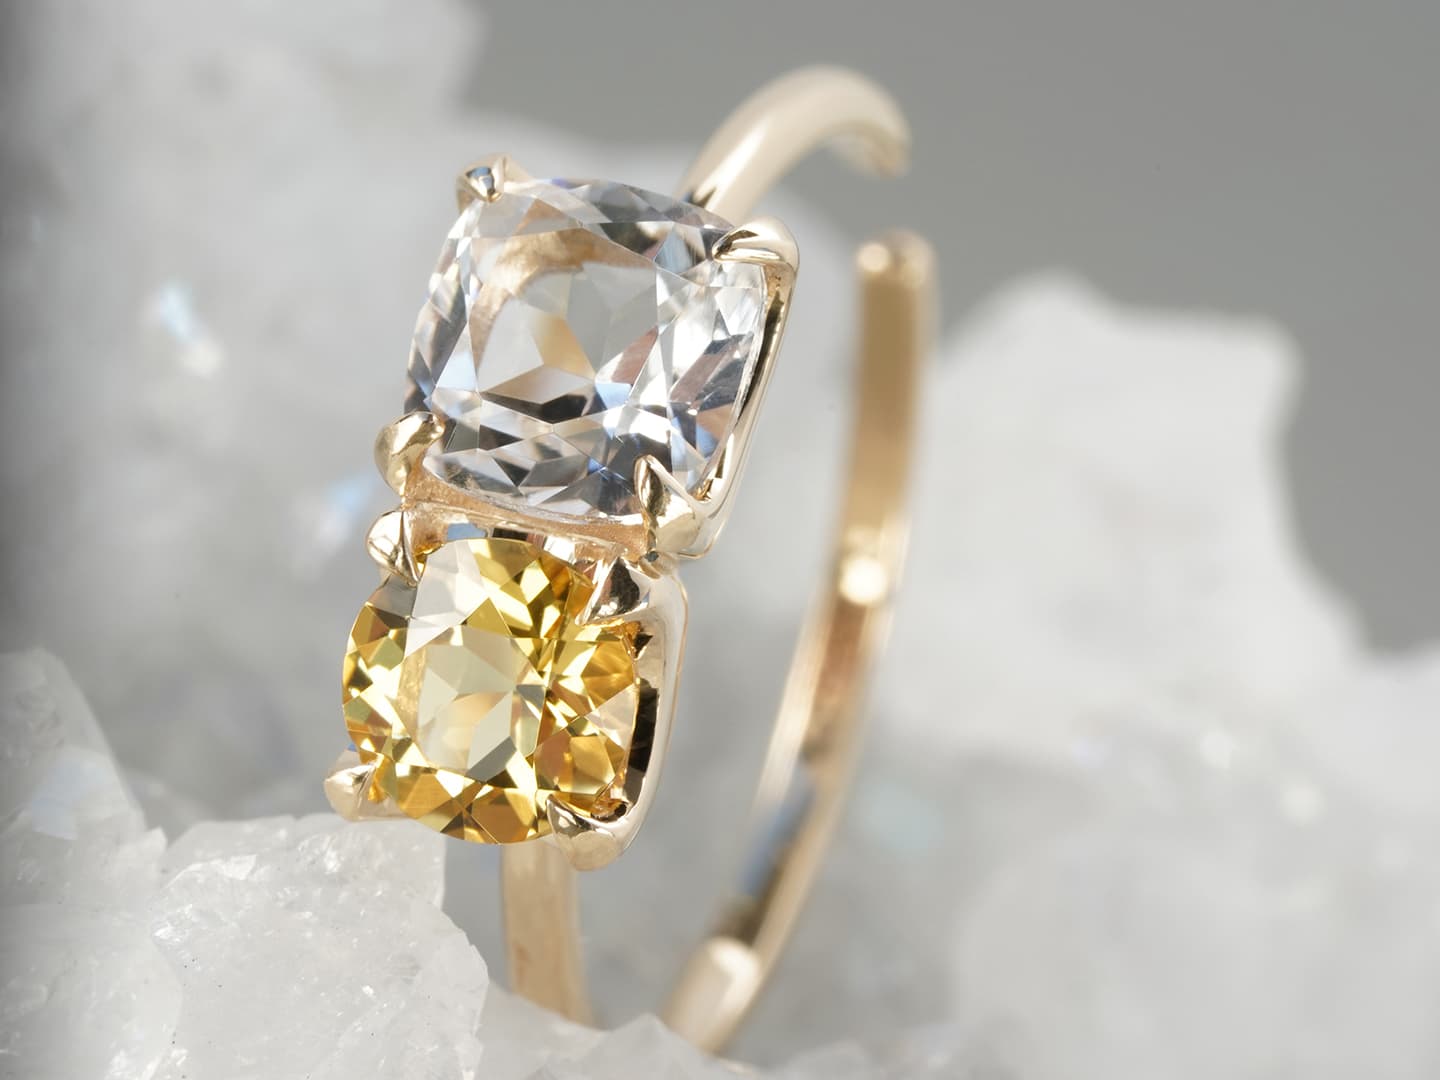 Golden beryl × Quartz ear cuff ring /ゴールデンベリル、クォーツ